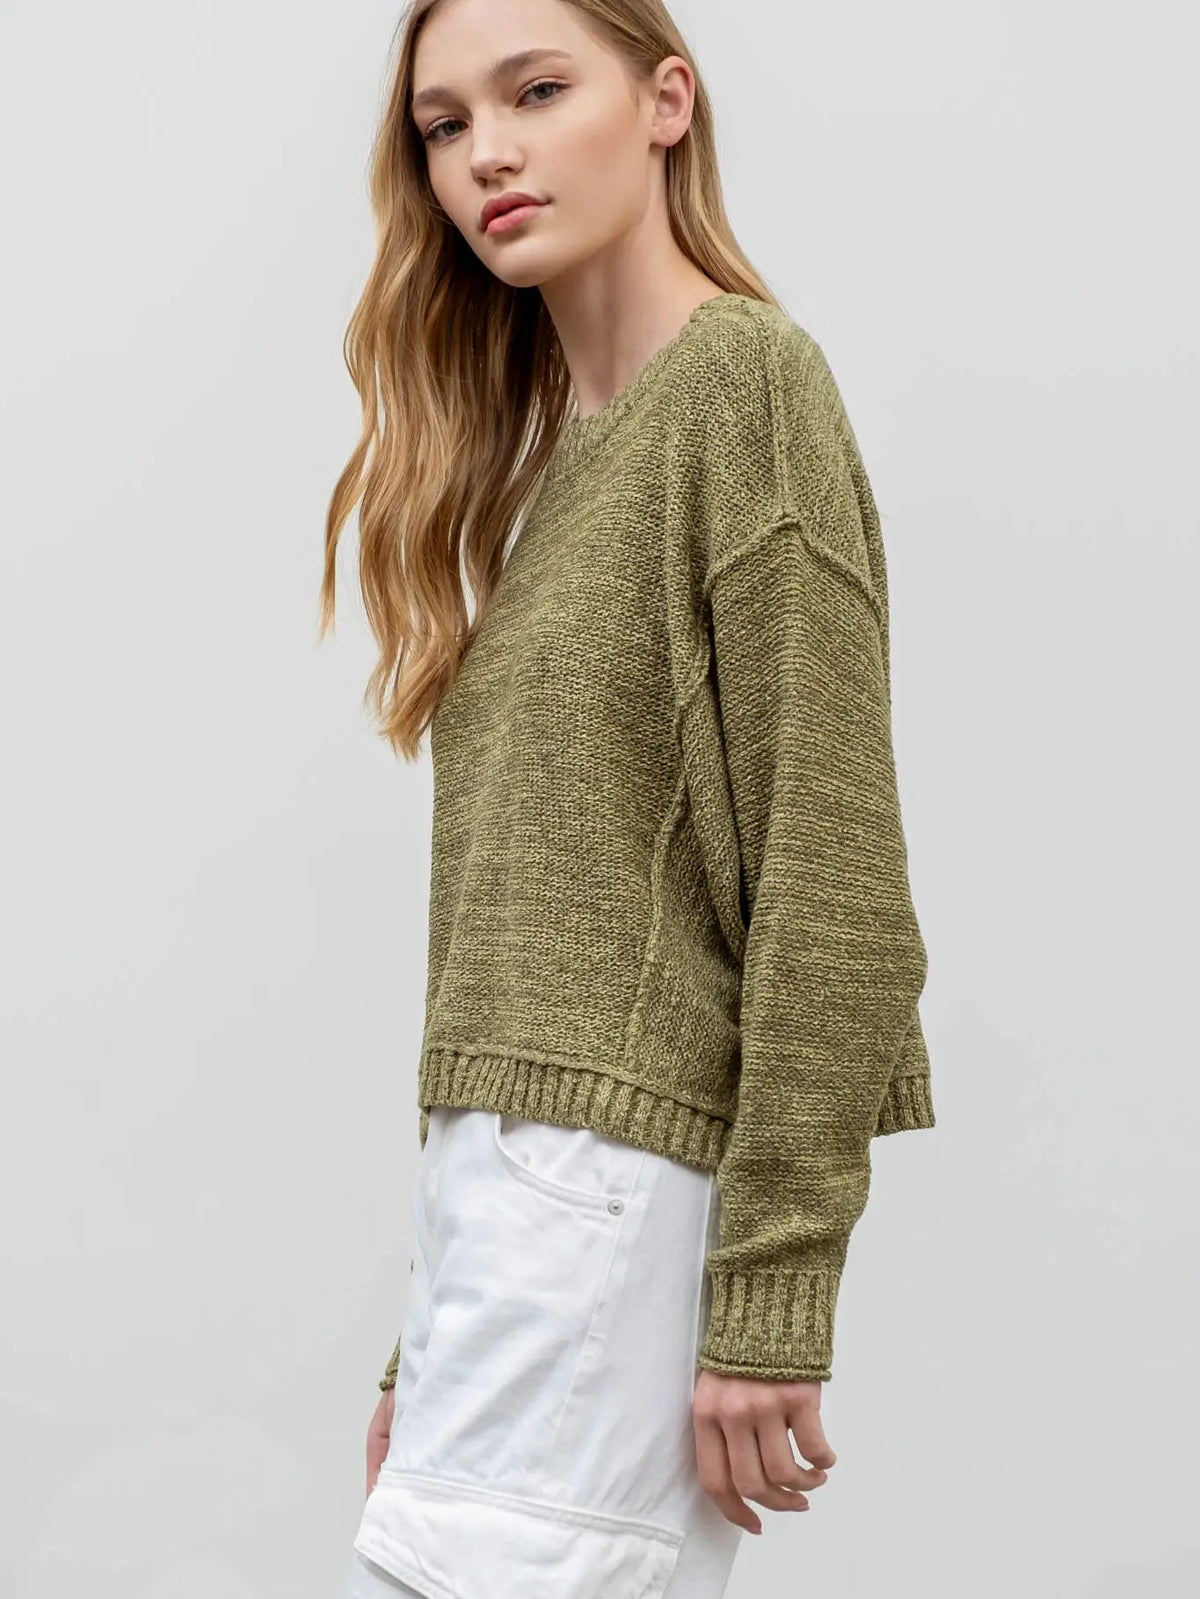 Saphron Olive Sweater